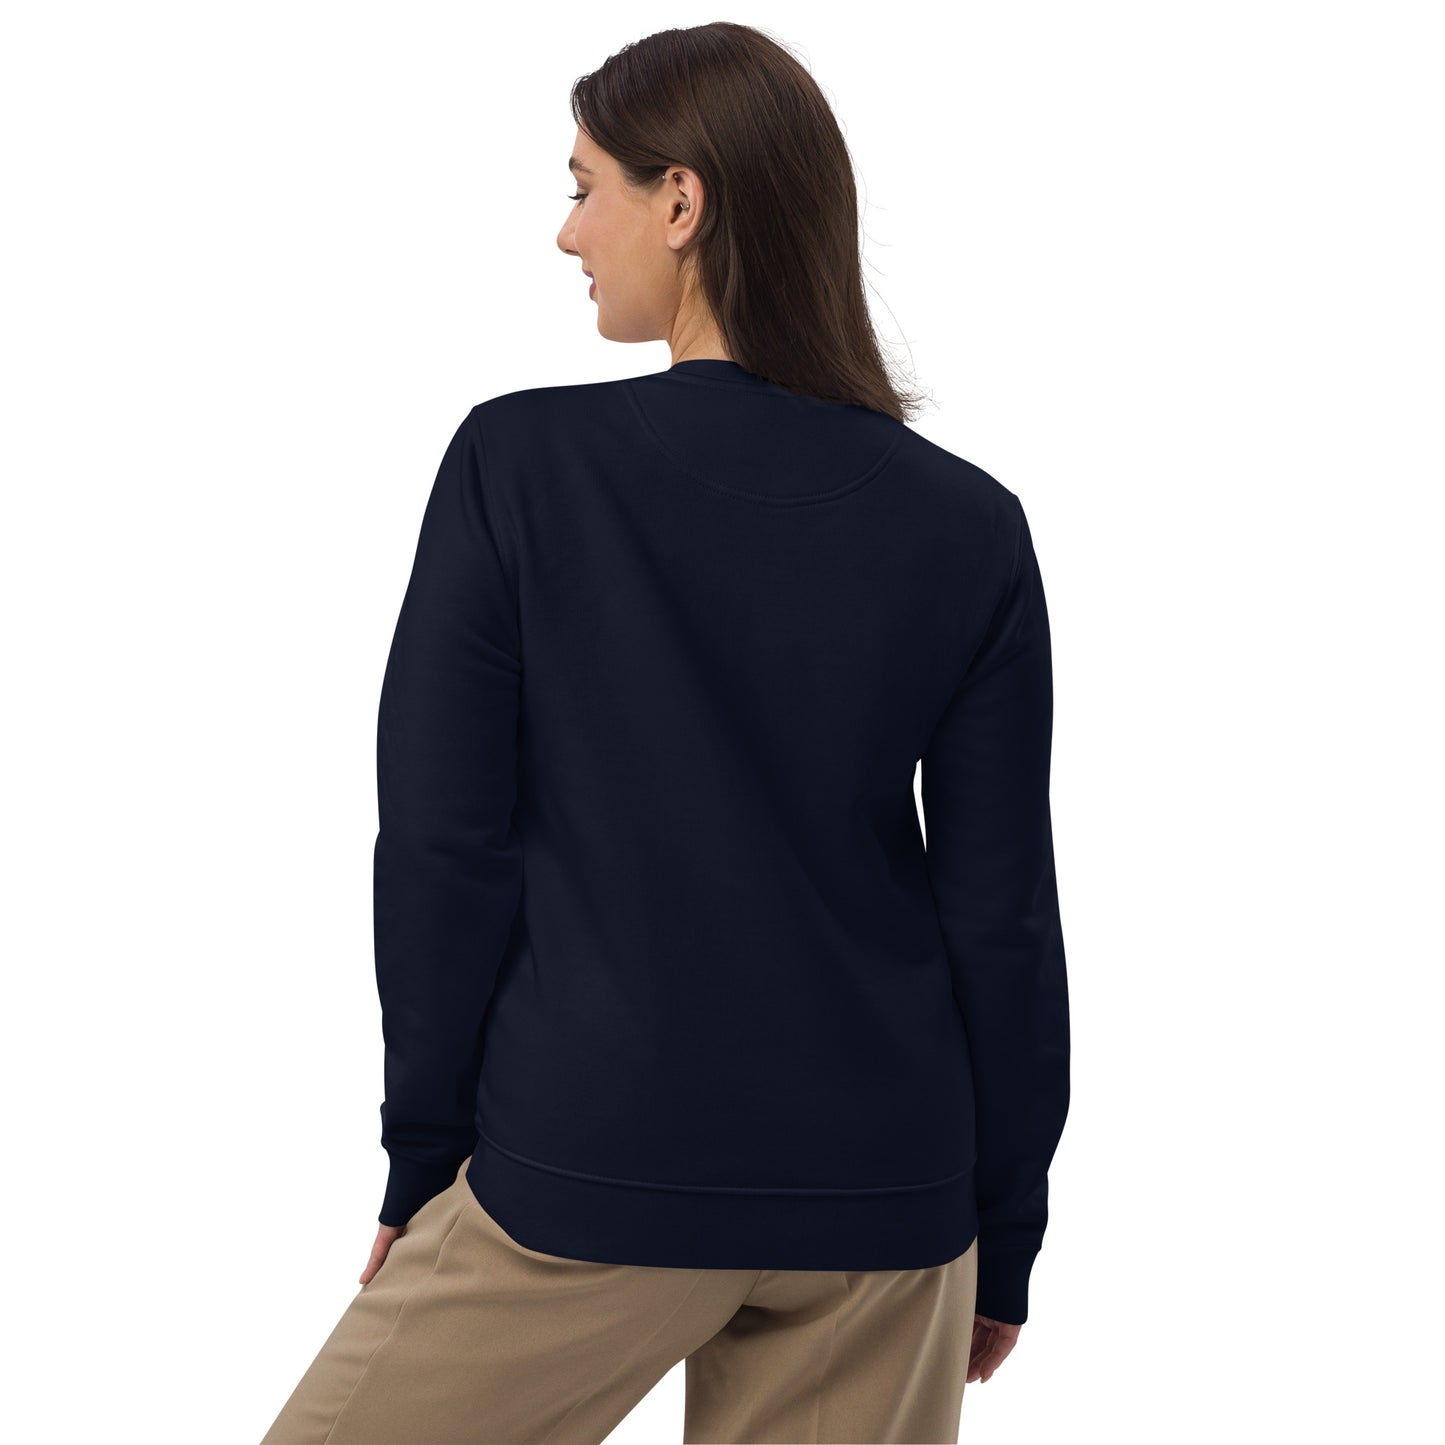 FE017.1 - Unisex Bio-Pullover - Sweater - Sweatshirt - Woman Life Freedom 1 - blue/red logo